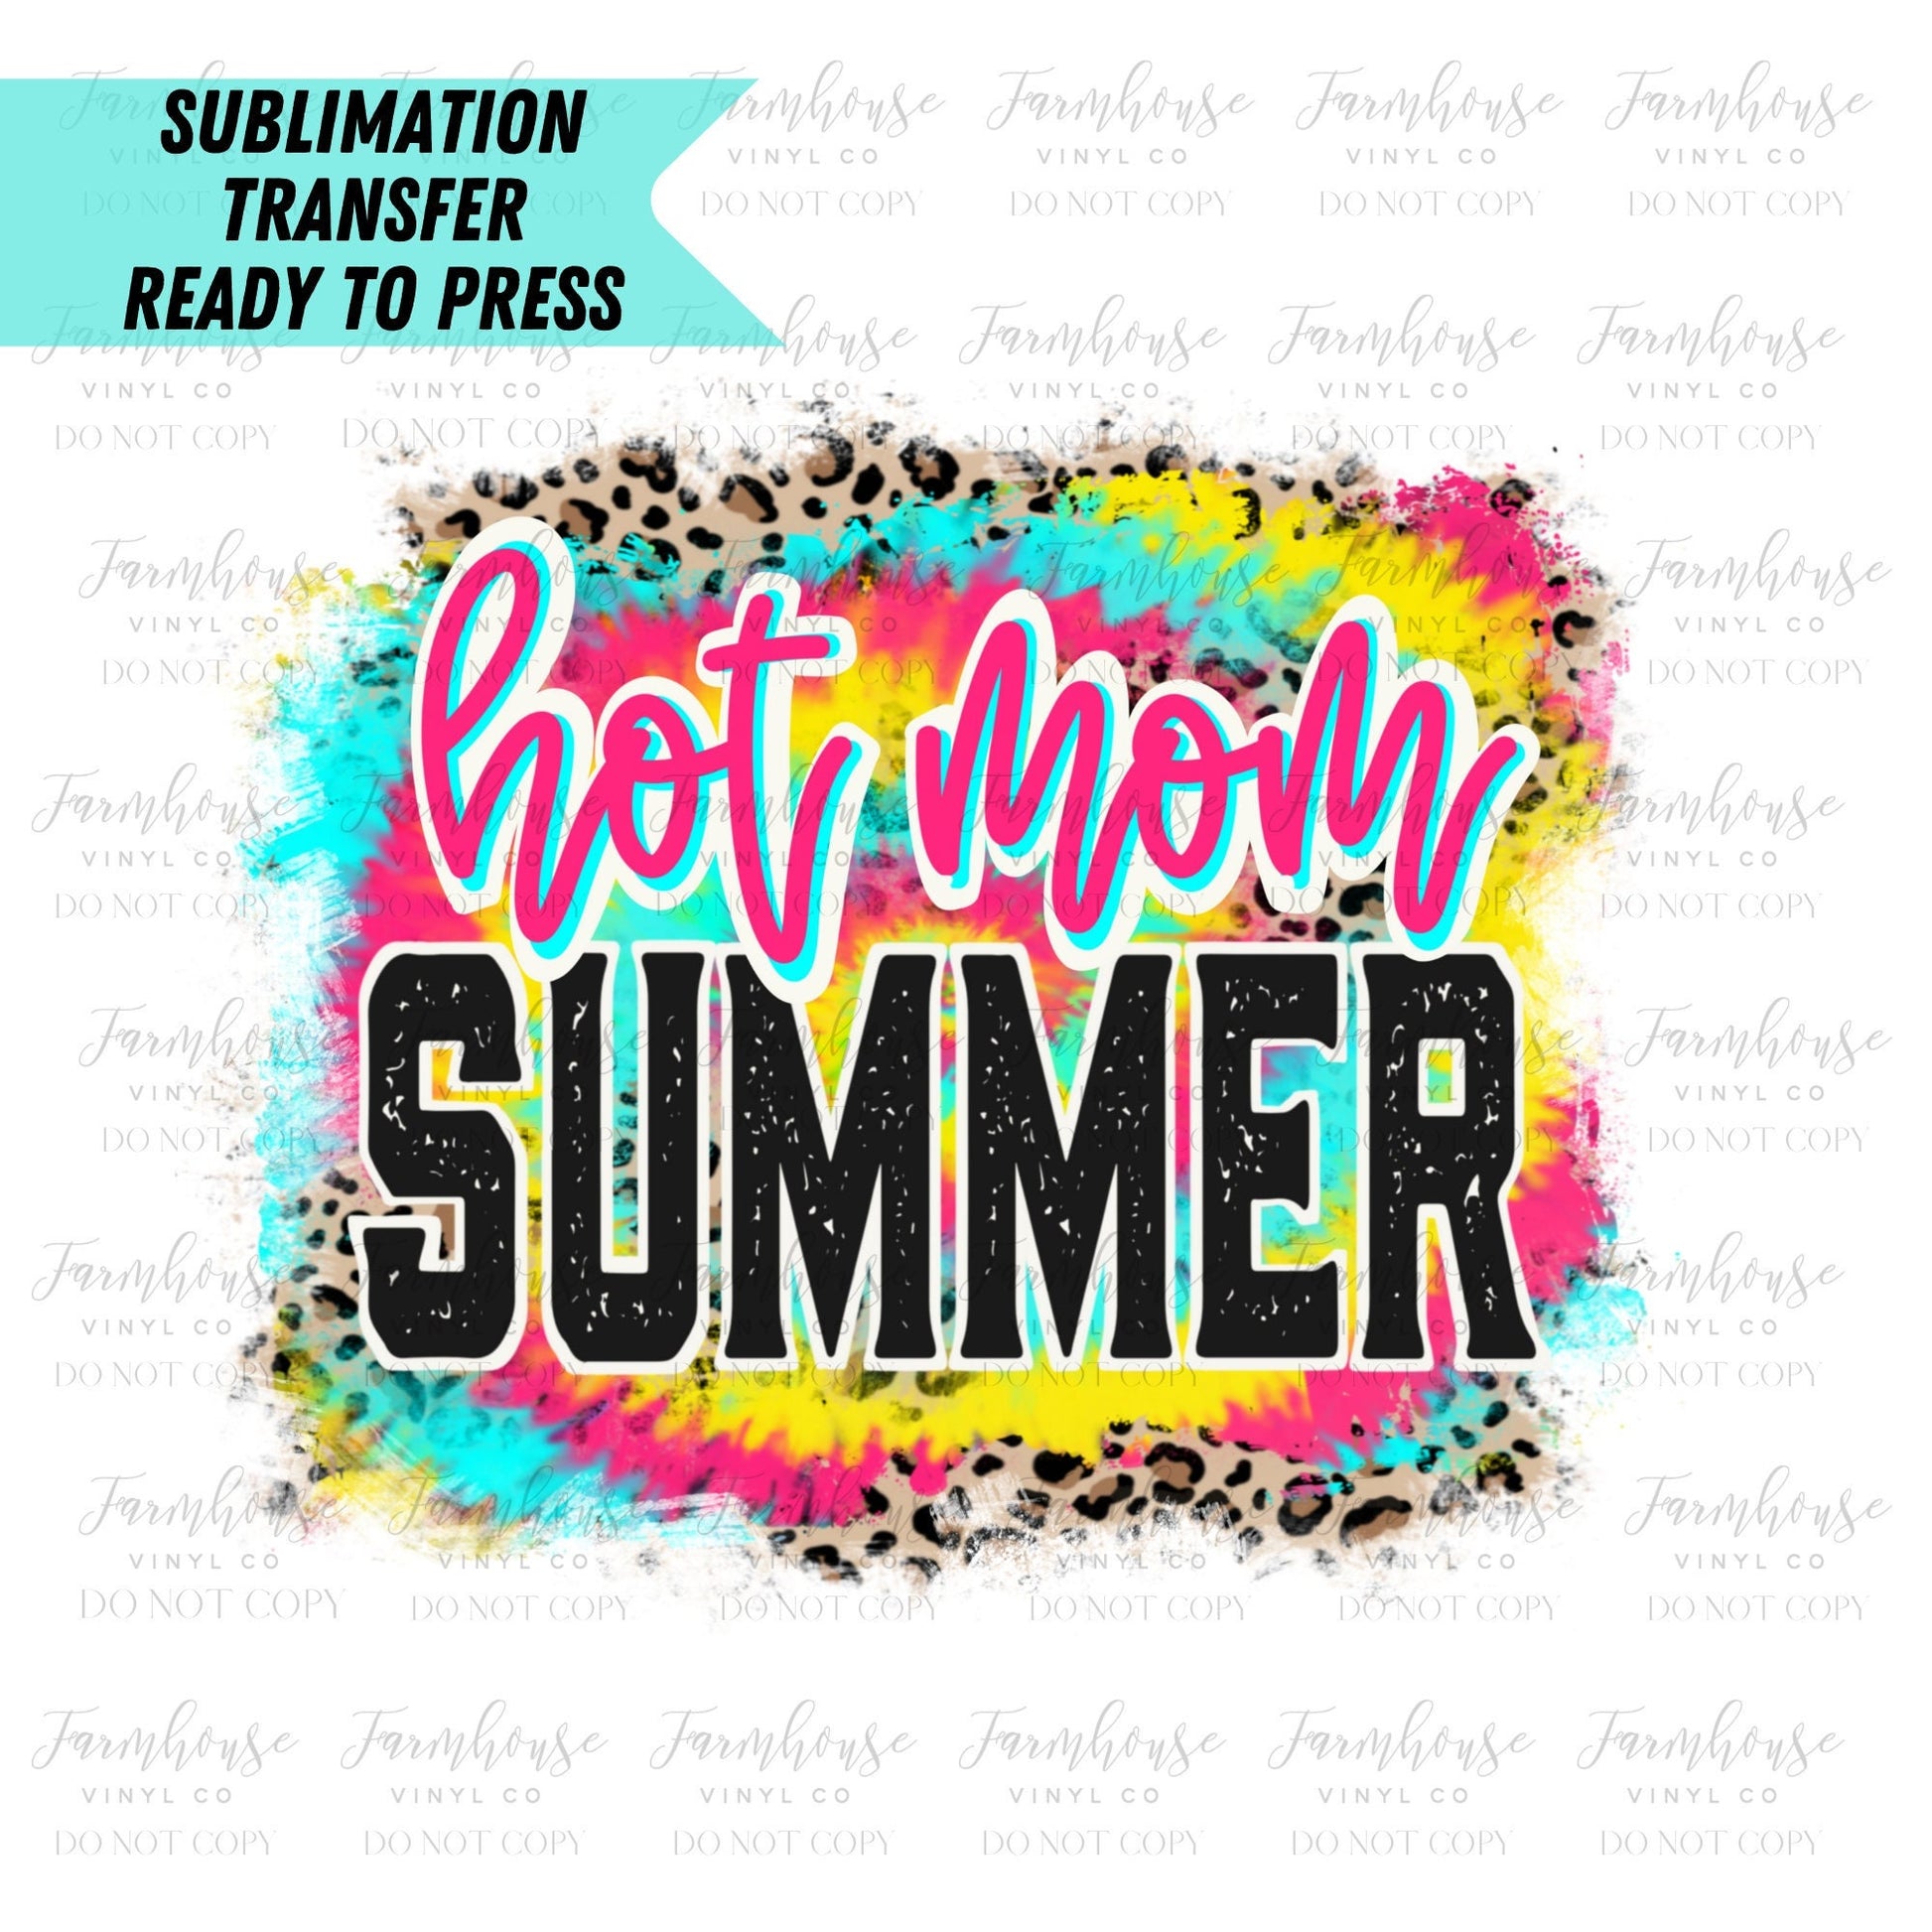 Neon Tie Dye Hot Mom Summer Ready to Press Sublimation Transfer - Farmhouse Vinyl Co